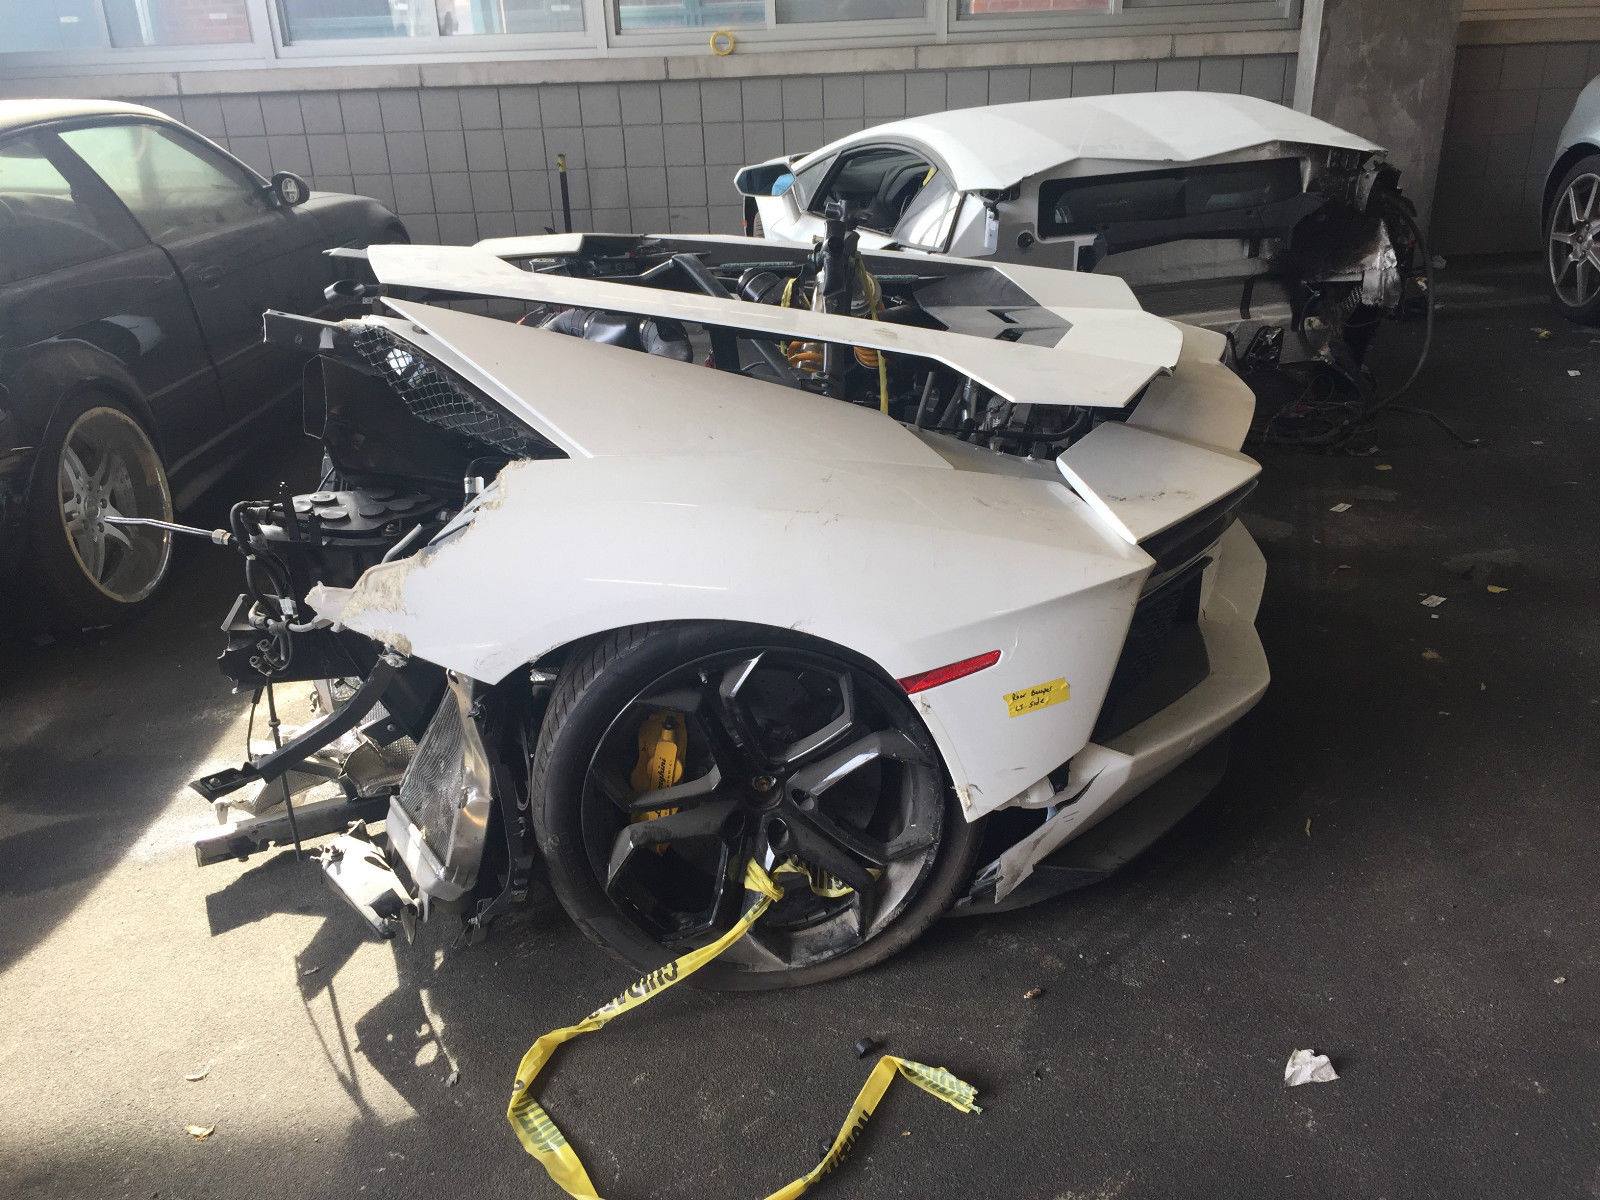 Wrecked Lamborghini Aventador for Sale at $125,000 - GTspirit